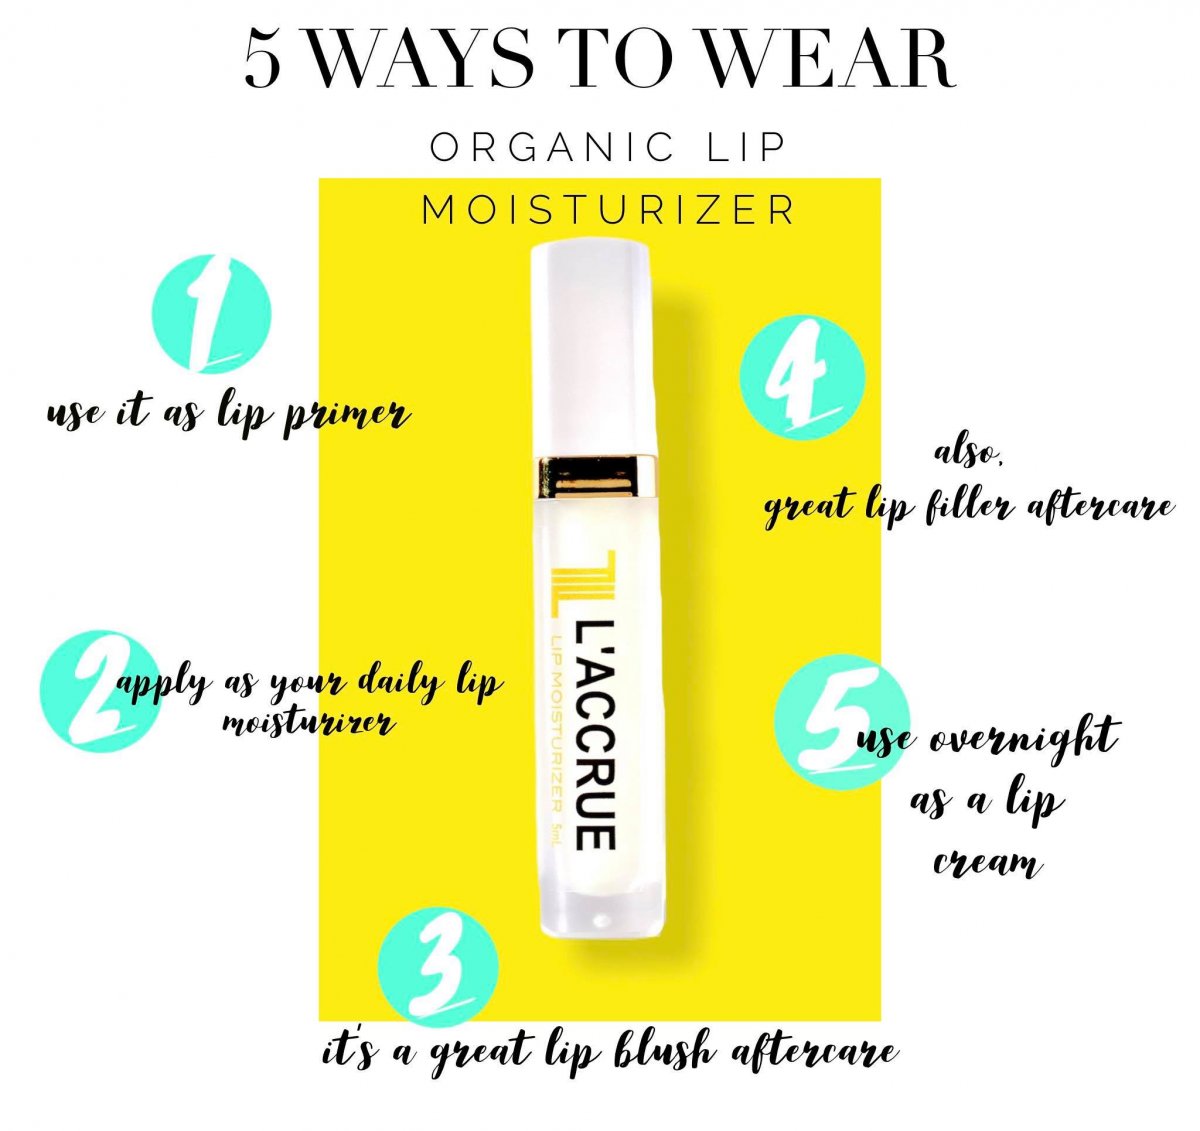 LACCRUE Organic Lip Moisturizer - 5 Ways to Wear